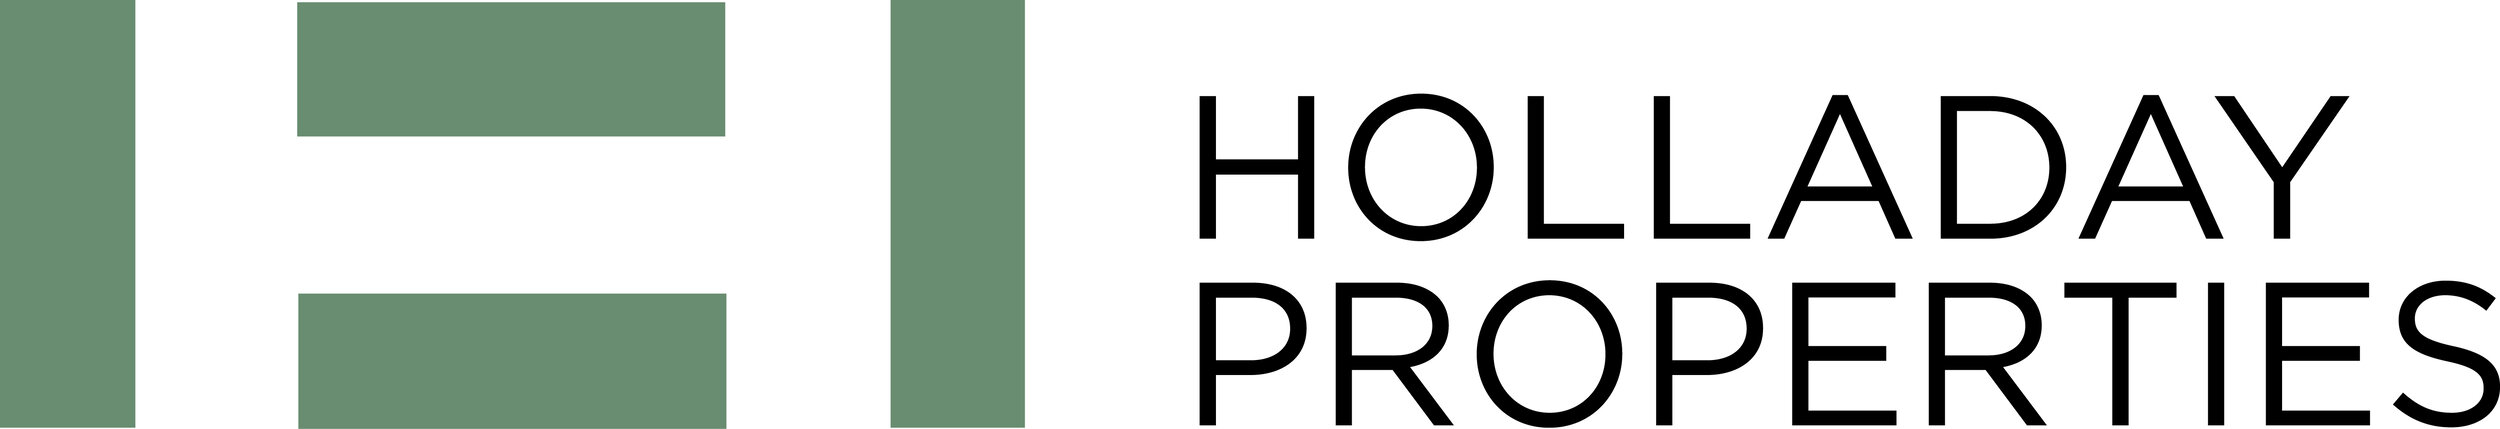 Holladay Properties logo